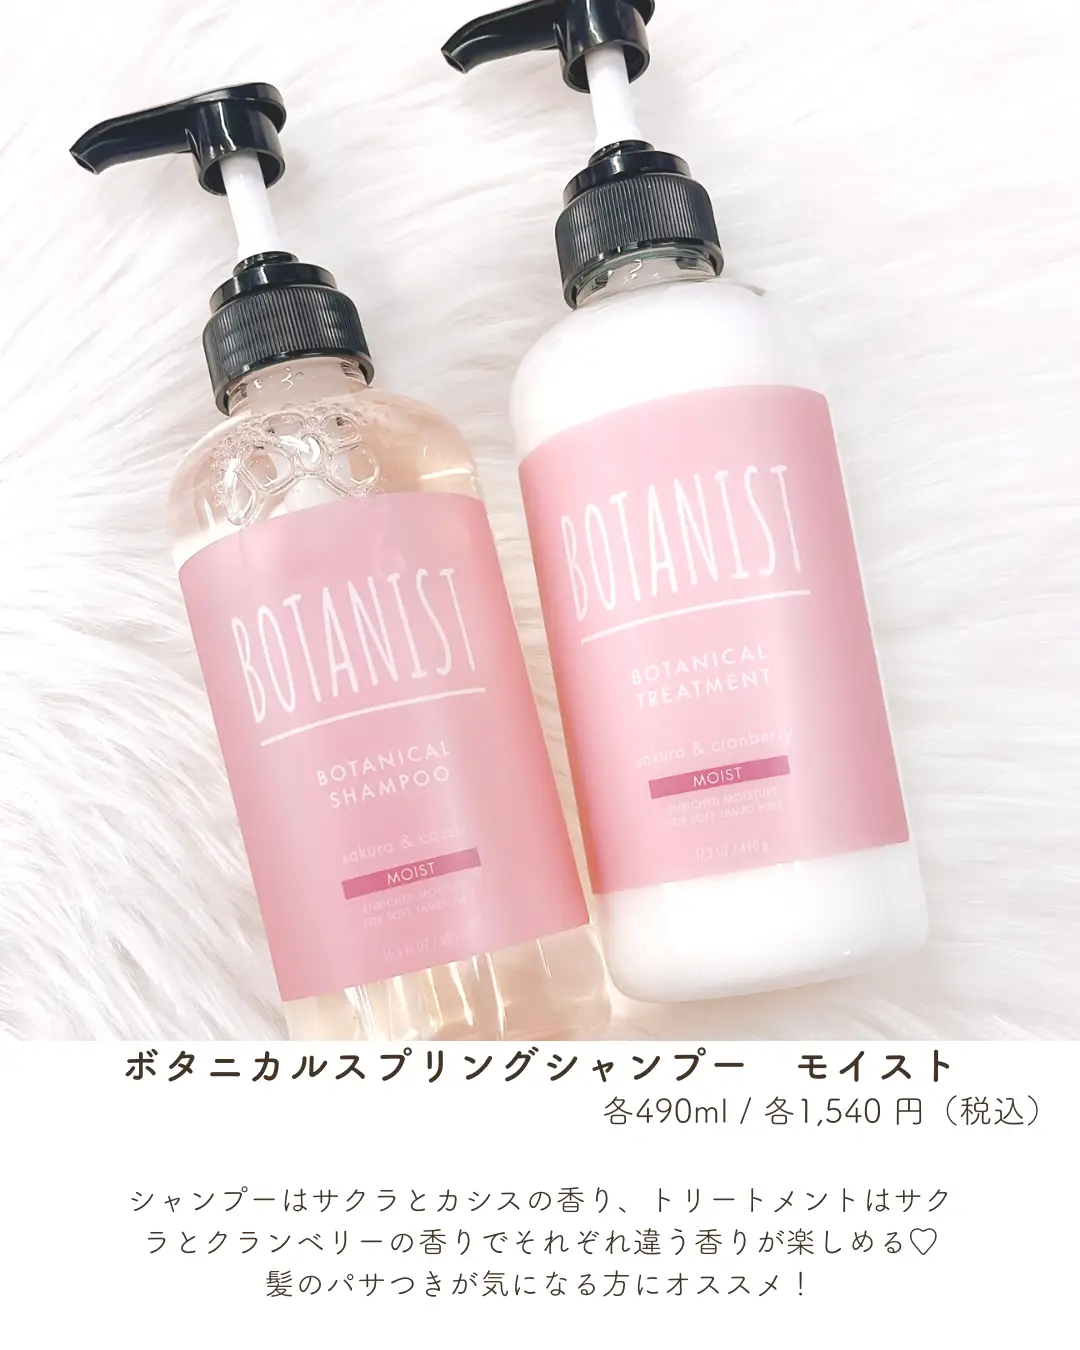  Sakura Japanese Shampoo - Routine Shampoo and